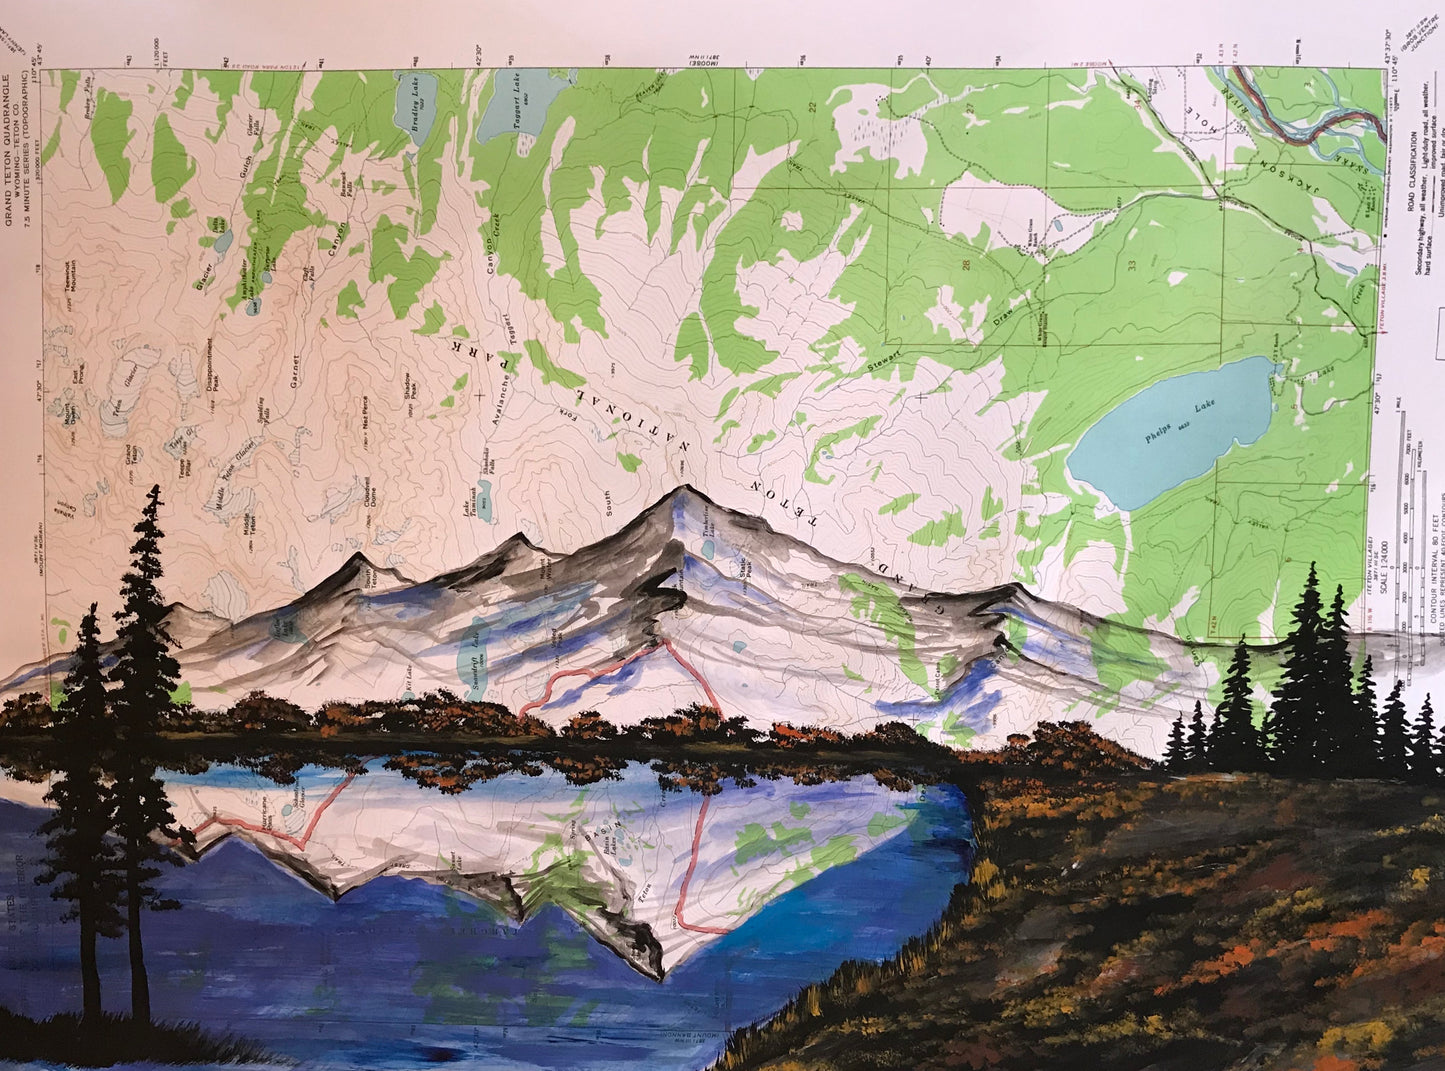 Grand Teton topographic map painting